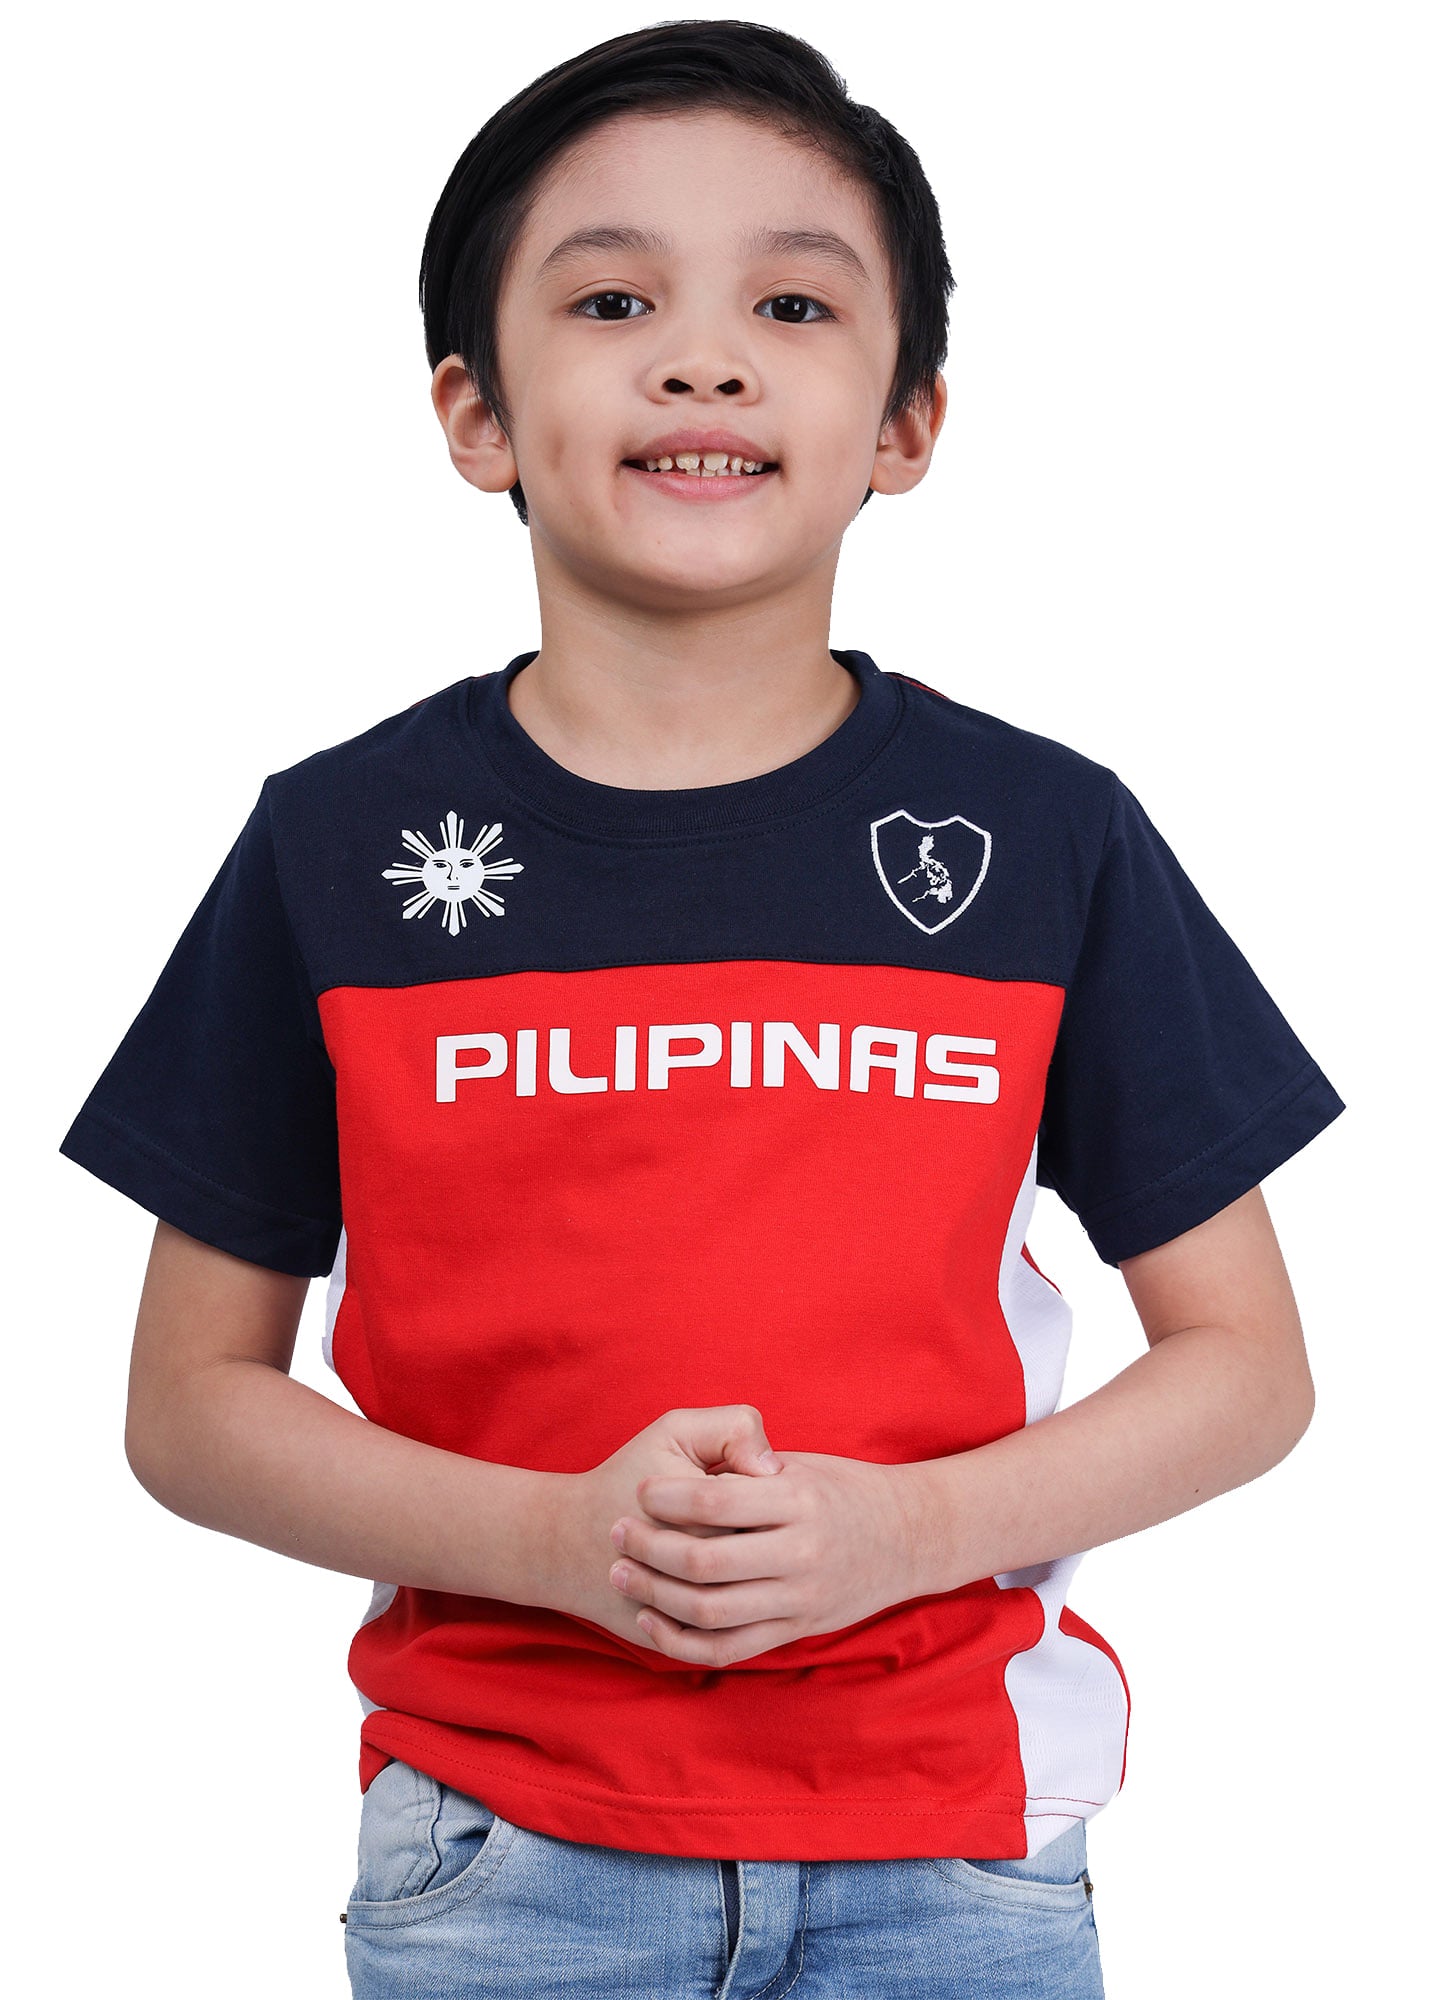 Pilipinas Retro T-shirt for Kids